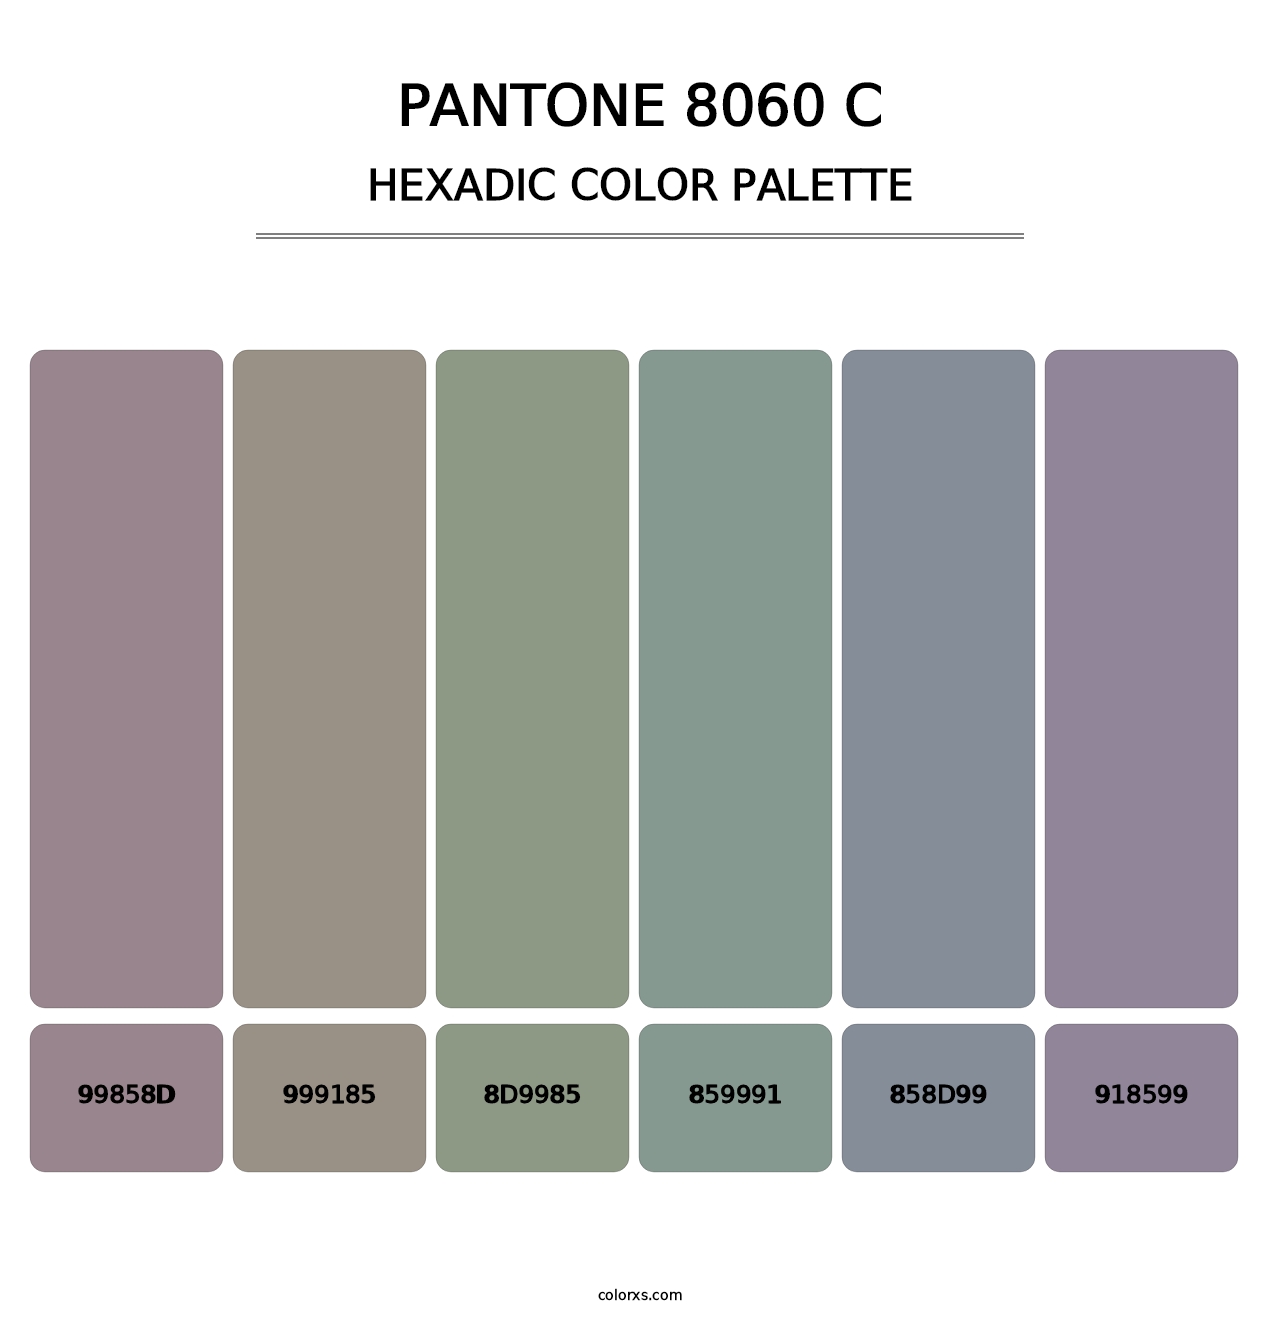 PANTONE 8060 C - Hexadic Color Palette